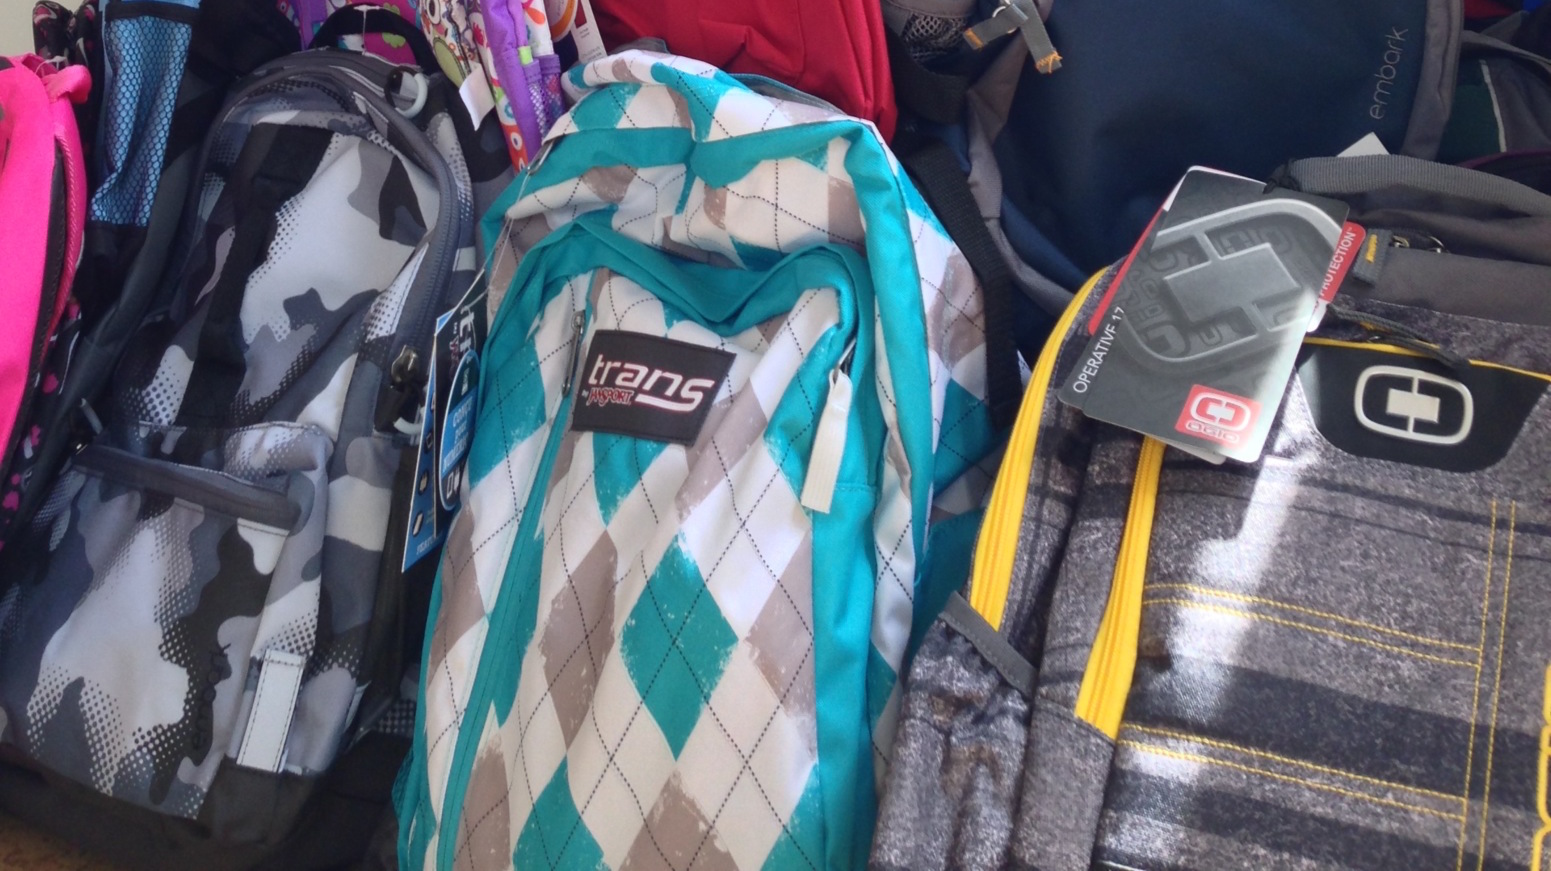 A display of backpacks